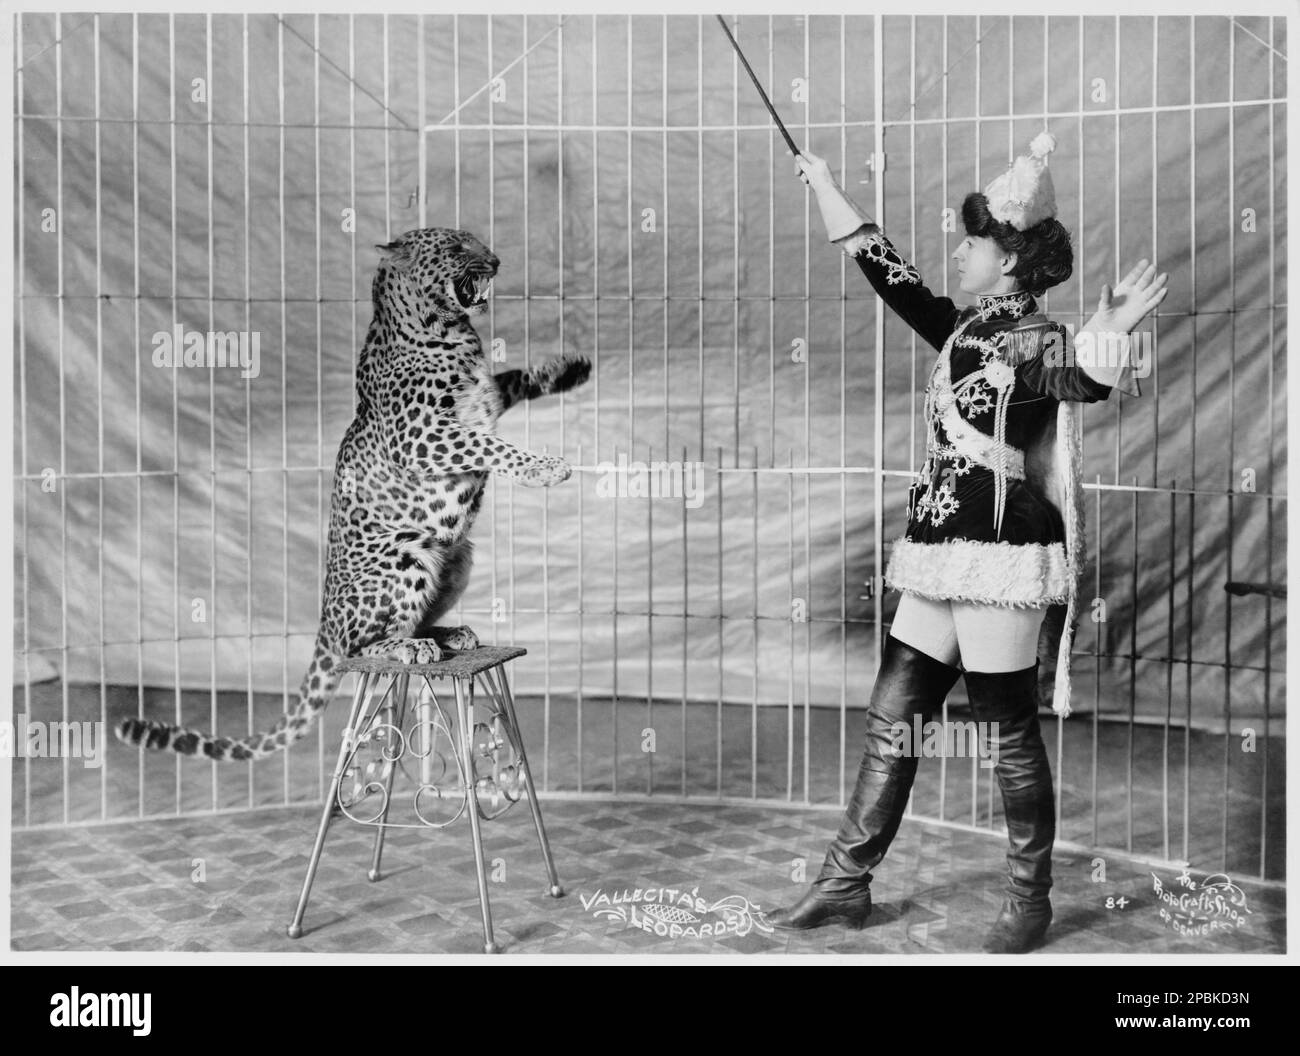 Leopardo Black and White Stock Photos & Images - Alamy